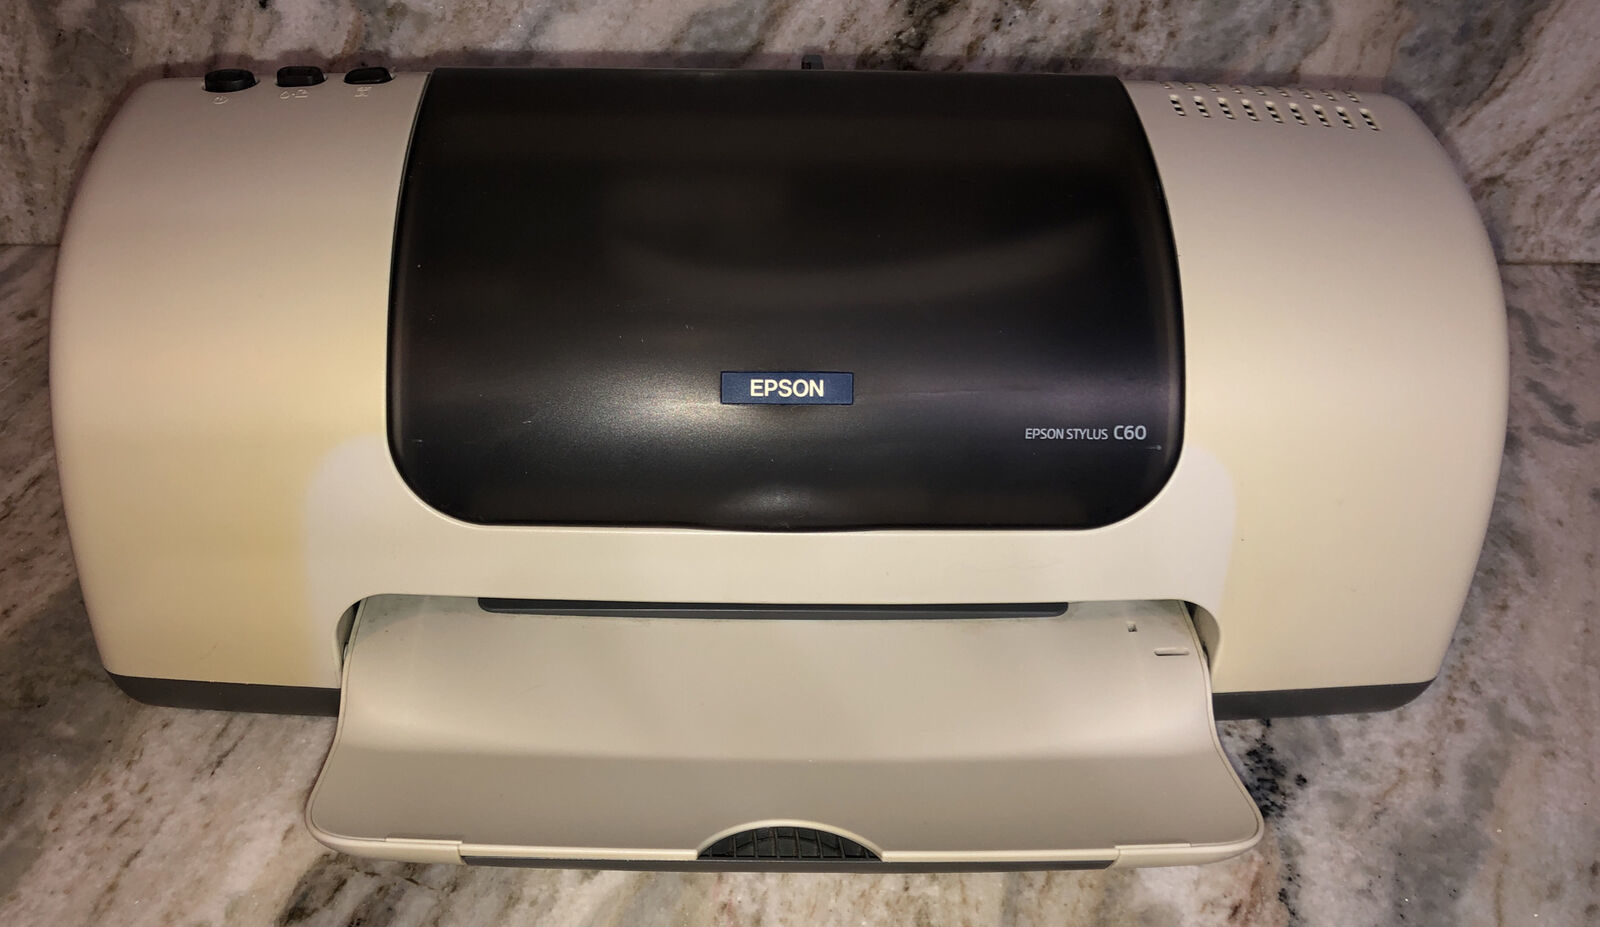 Epson Stylus C60 Digital Photo Inkjet Printer-Parts Only-Very Good Condition - $123.52